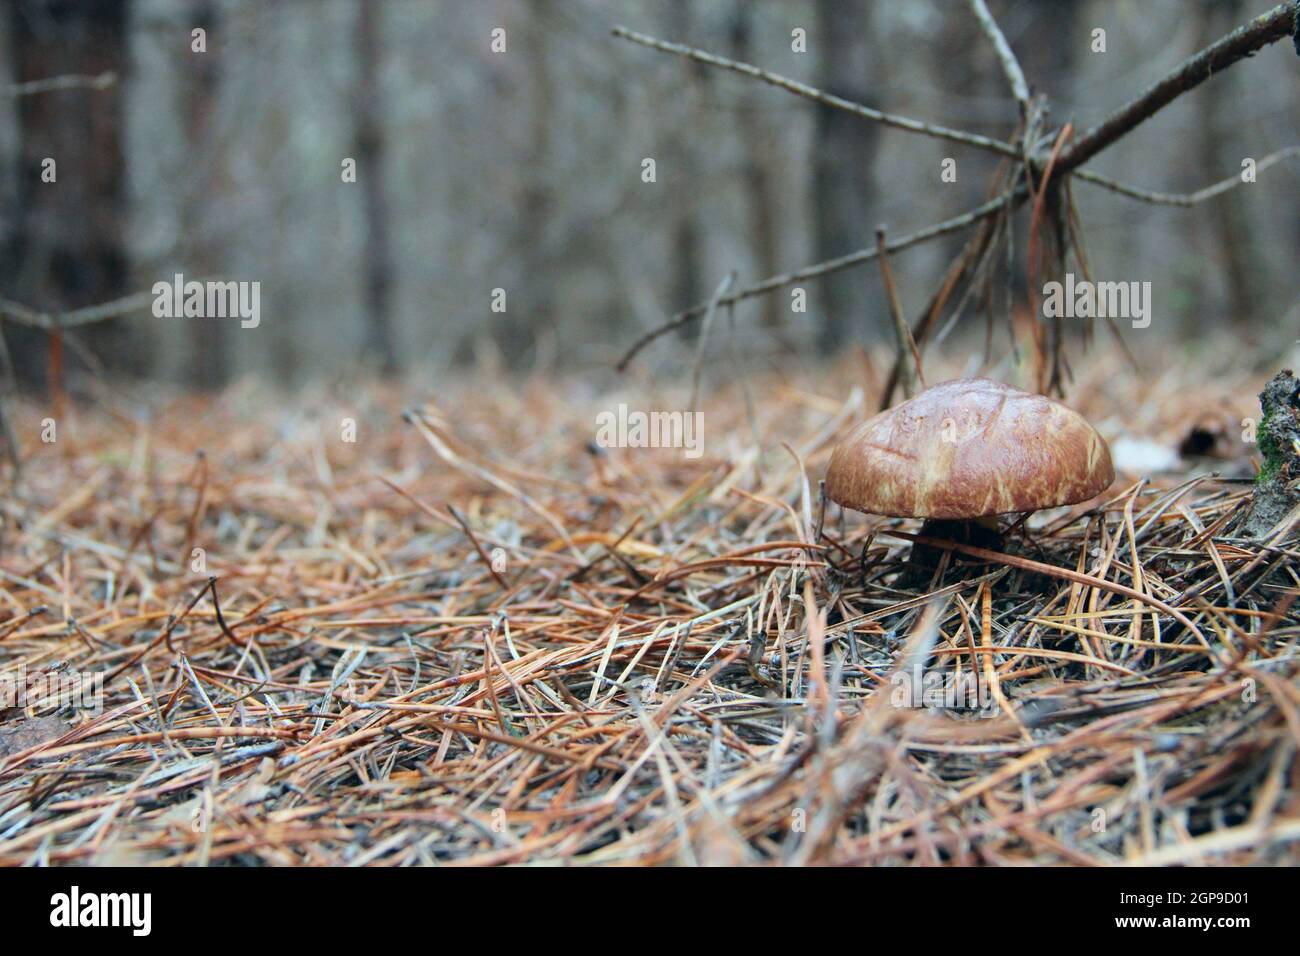 Mushrooms of Suillus grow in autumn forest. Mushroom Suillus luteus common growing in pine forest. Lonely boletus mushroom growing in coniferous wood. Stock Photo